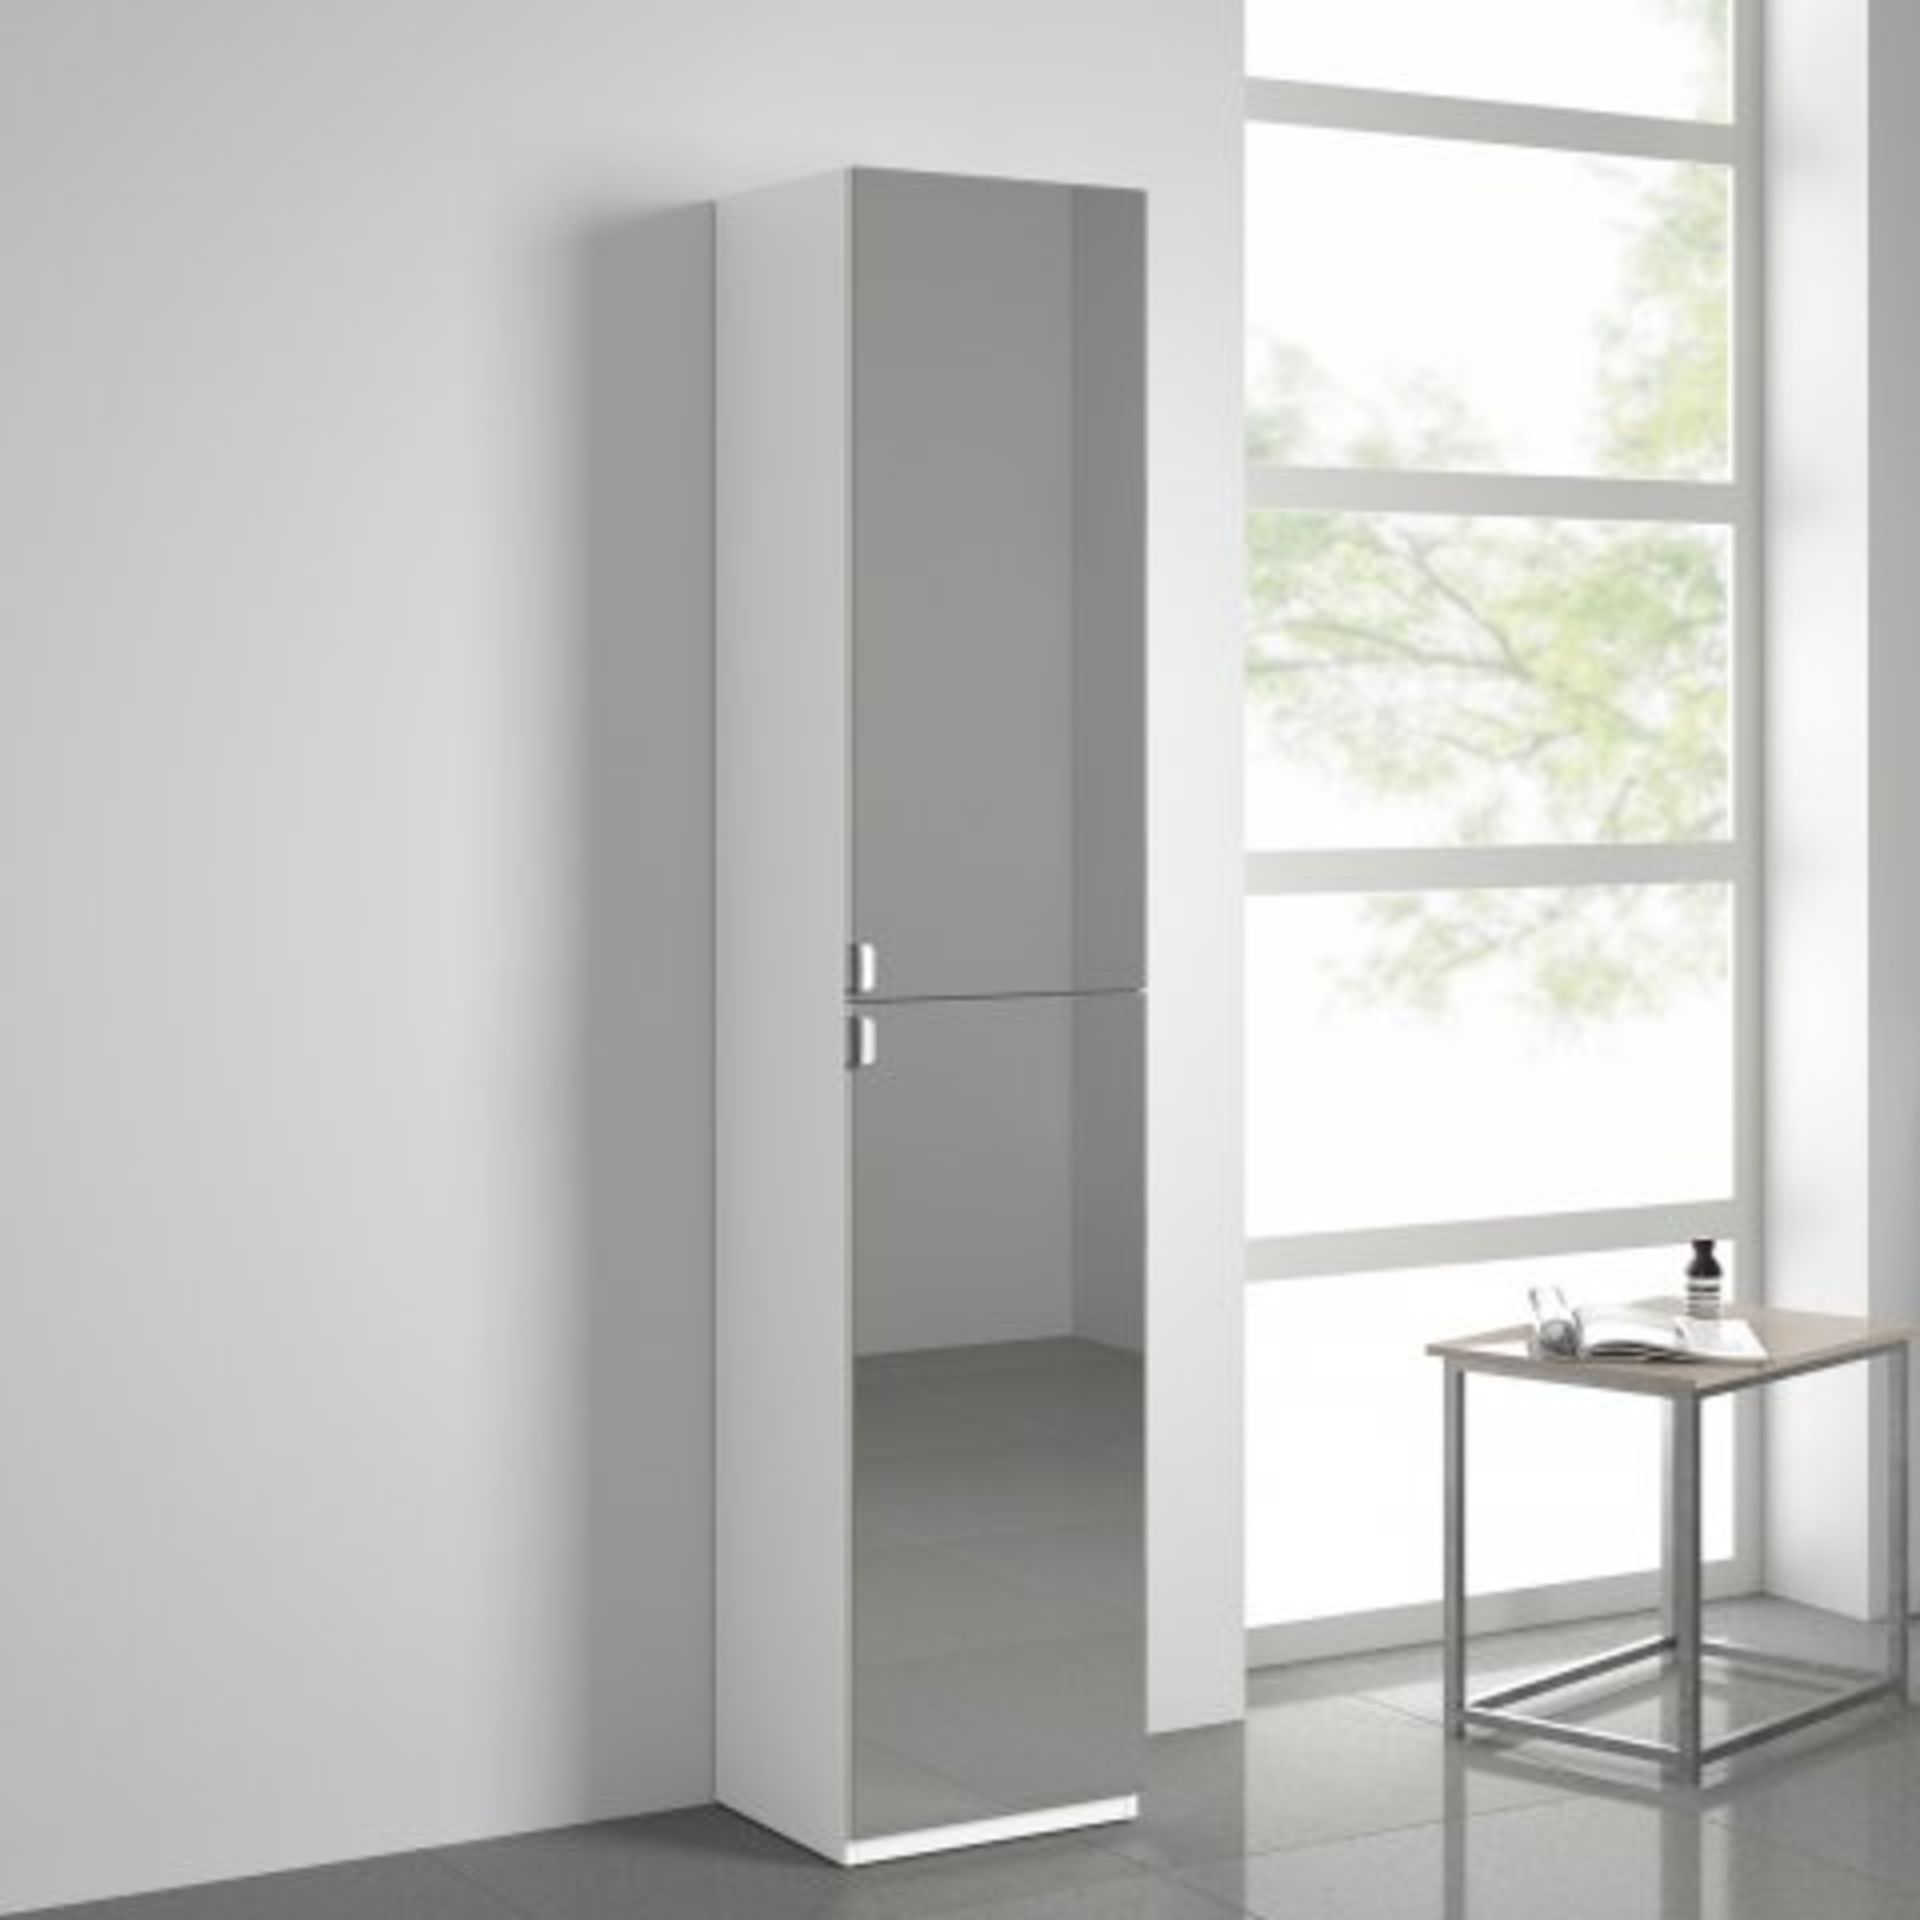 (K27) 1700x350mm Mirrored Door Matte White Tall Storage Cabinet - Floor Standing. RRP £339.99. - Image 3 of 5